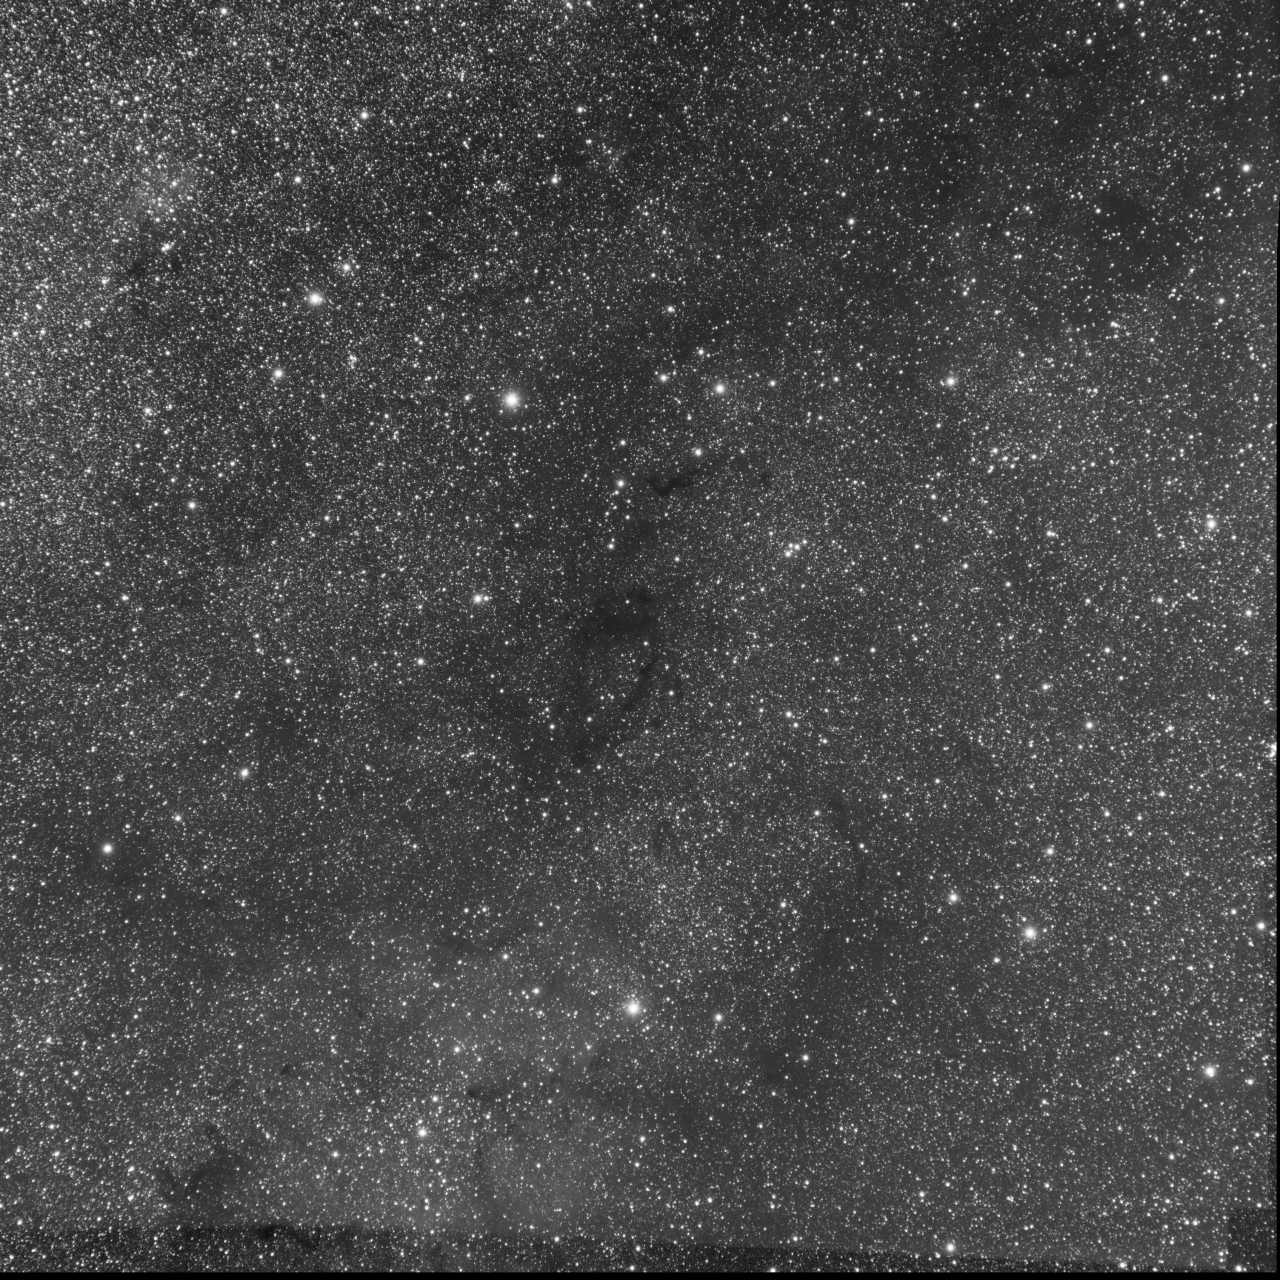 Cepheus on Barnard 170 - L